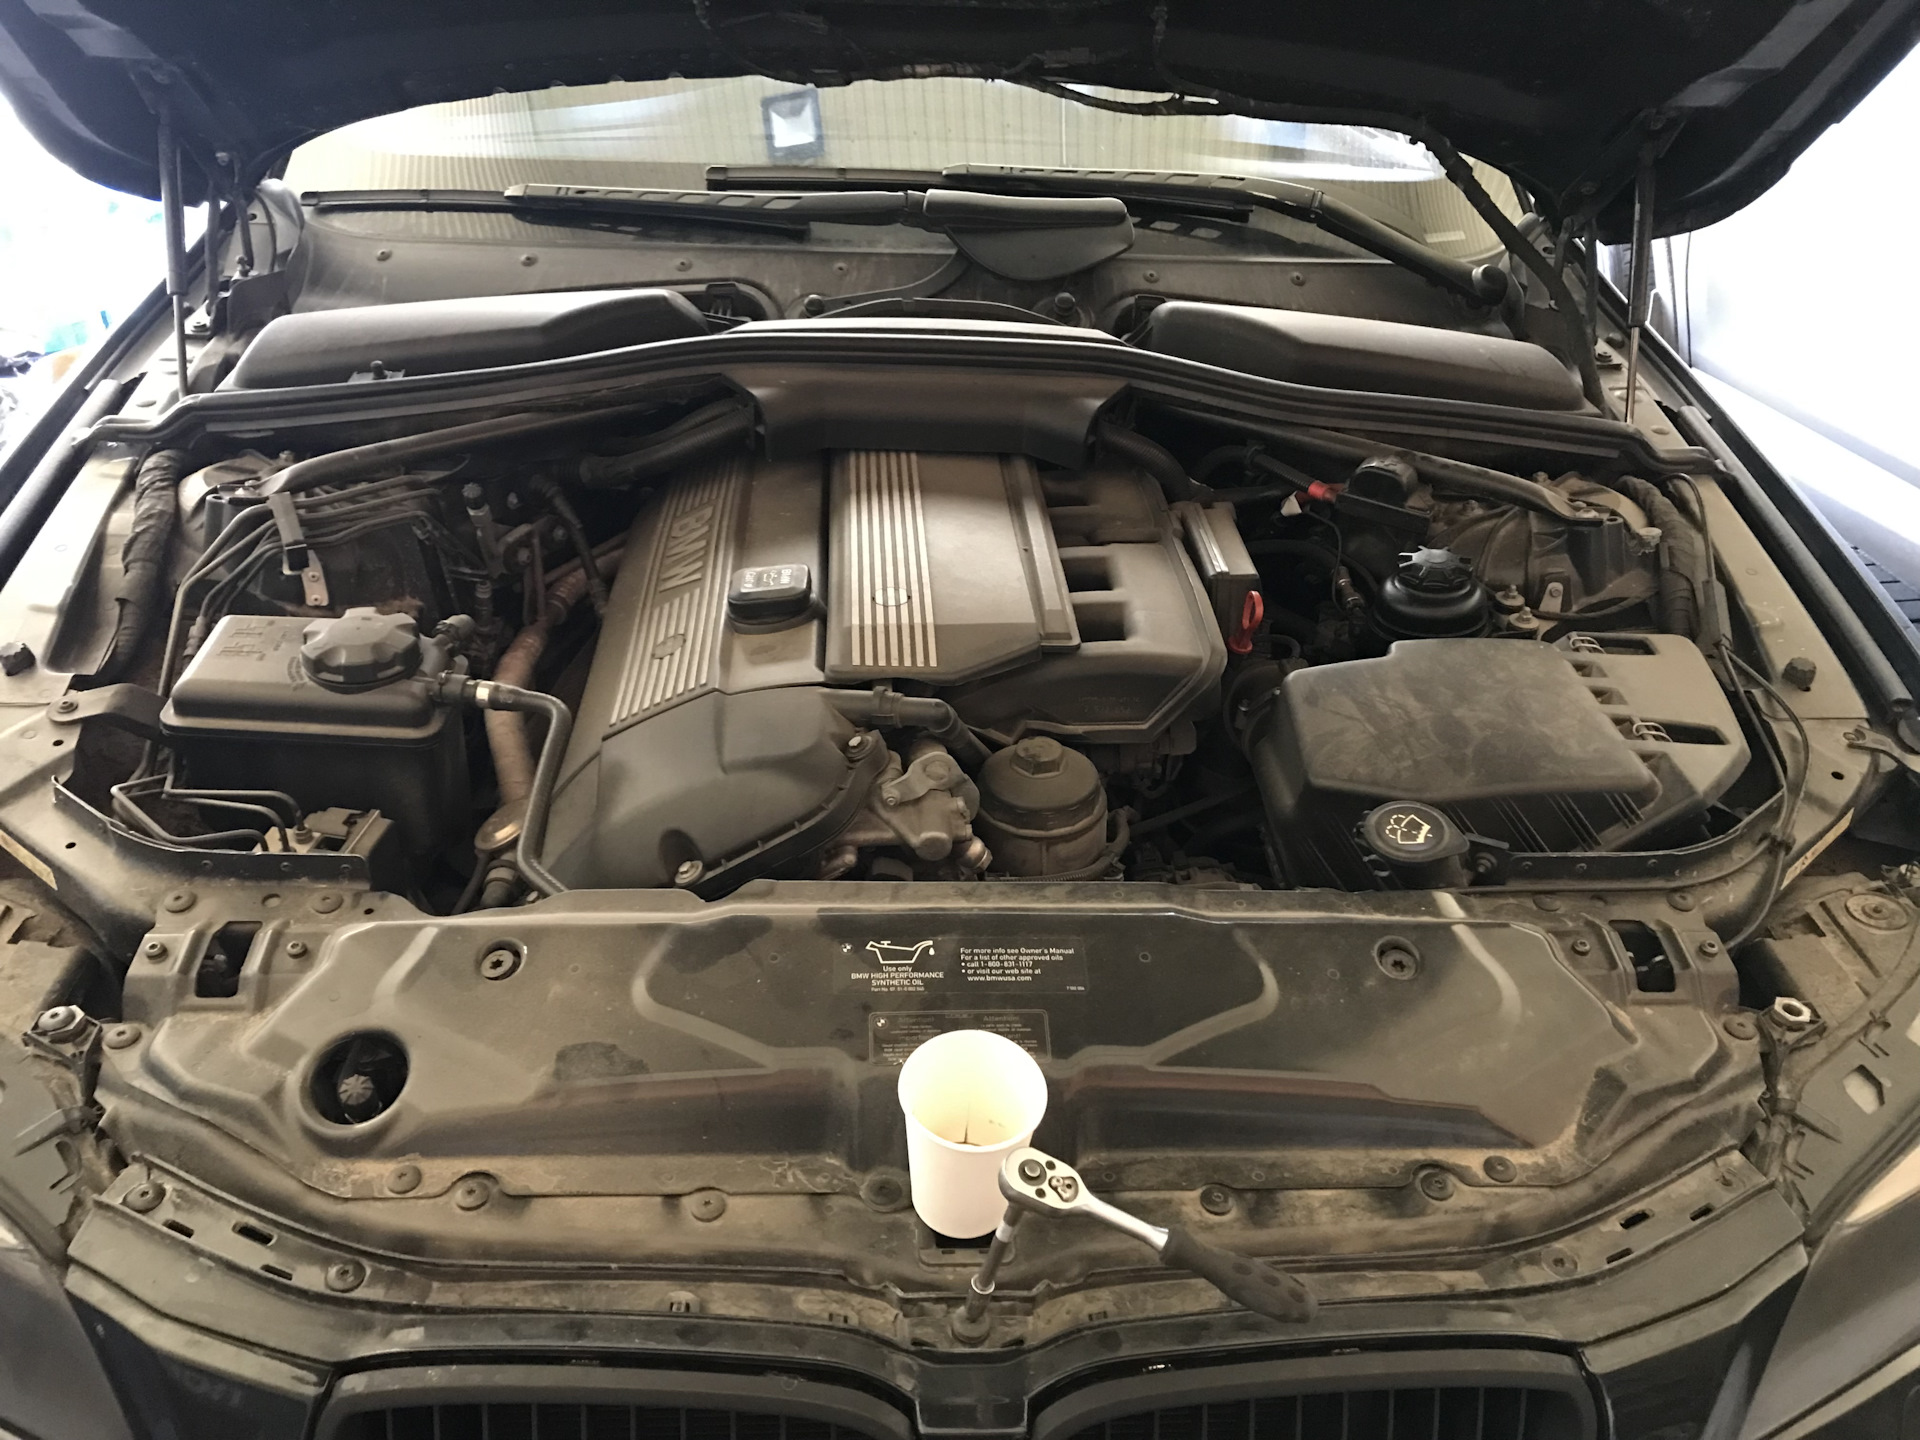 BMW e60 — Не большая мойка/чистка подкапотки — BMW 5 series (E60), 3 л .